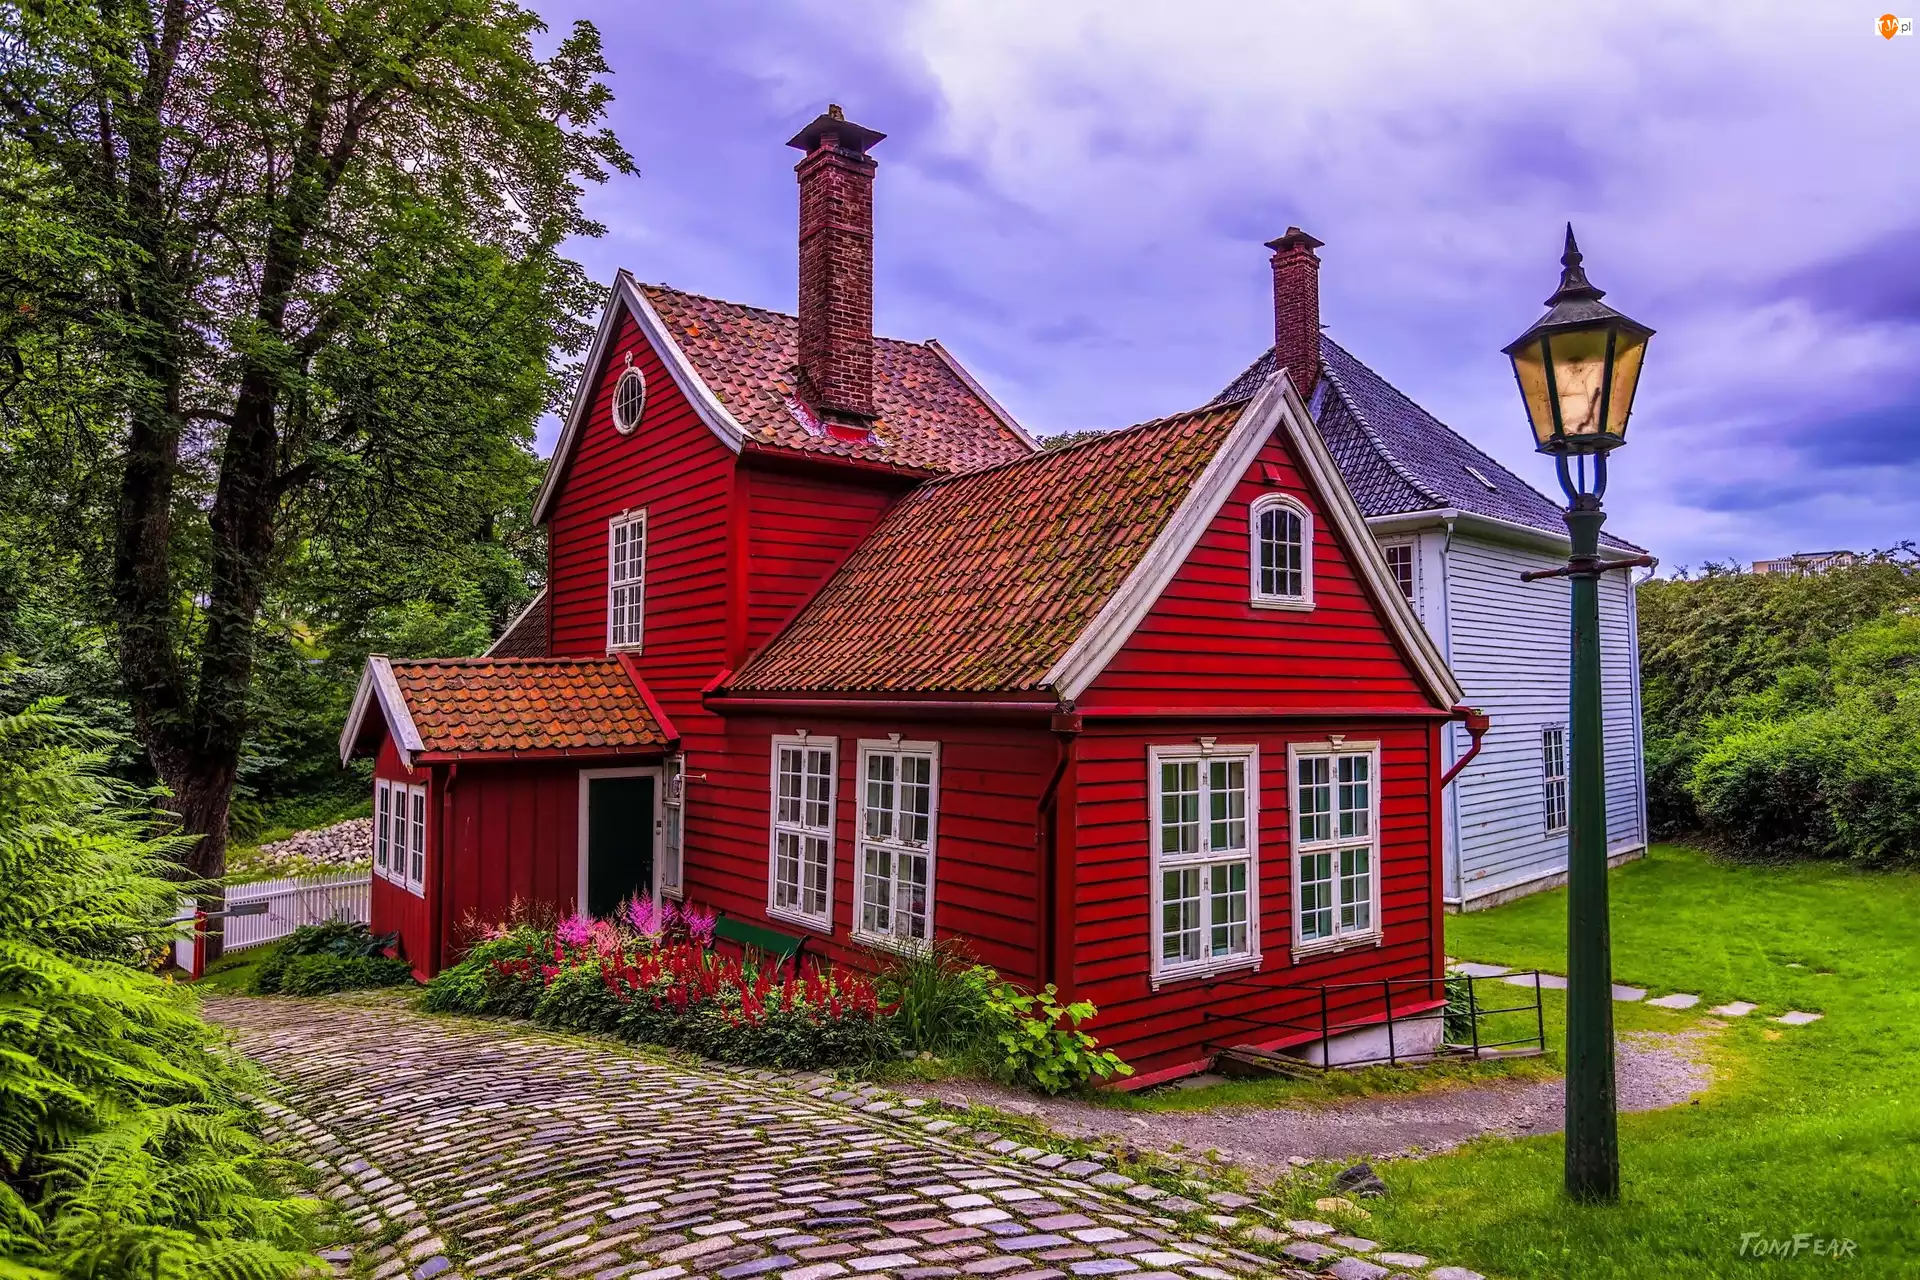 Kwiaty, Bergen, Latarnia, Dom, Droga, Skansen miejski, Old Bergen Museum - Bergen City Museum, Norwegia, Czerwony